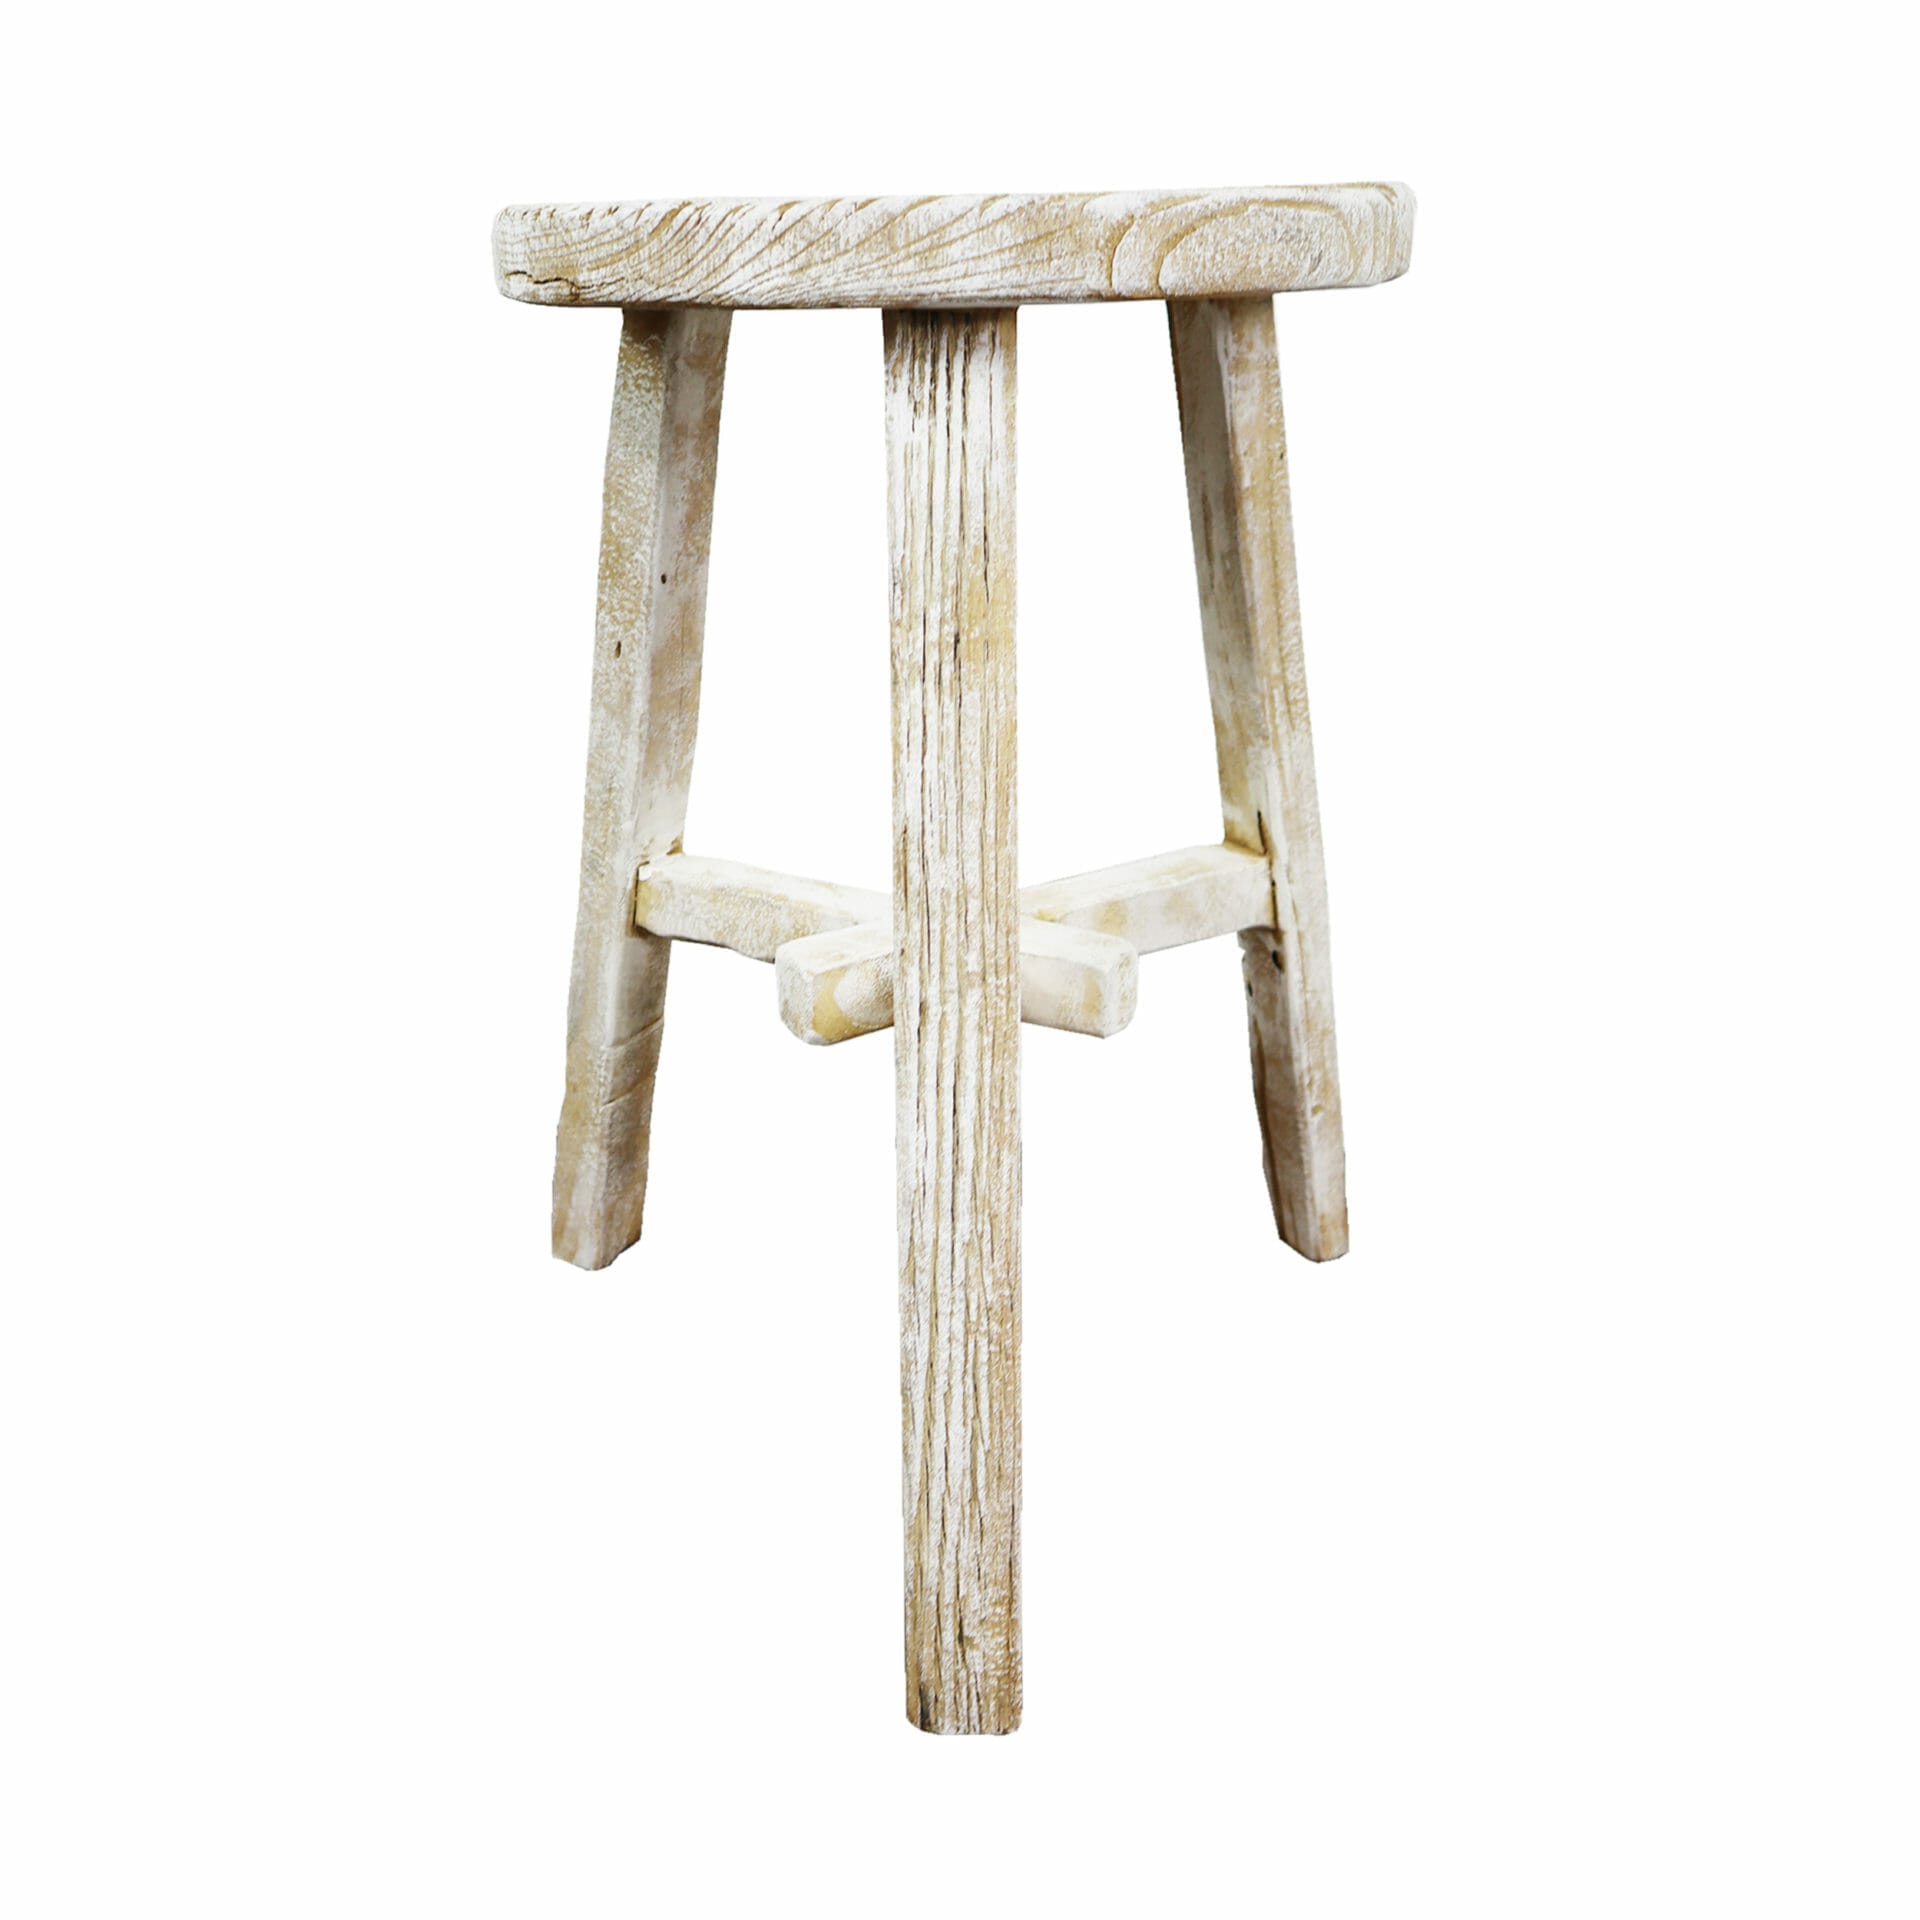 elm wood handmade stool white wash finish rustic furniture